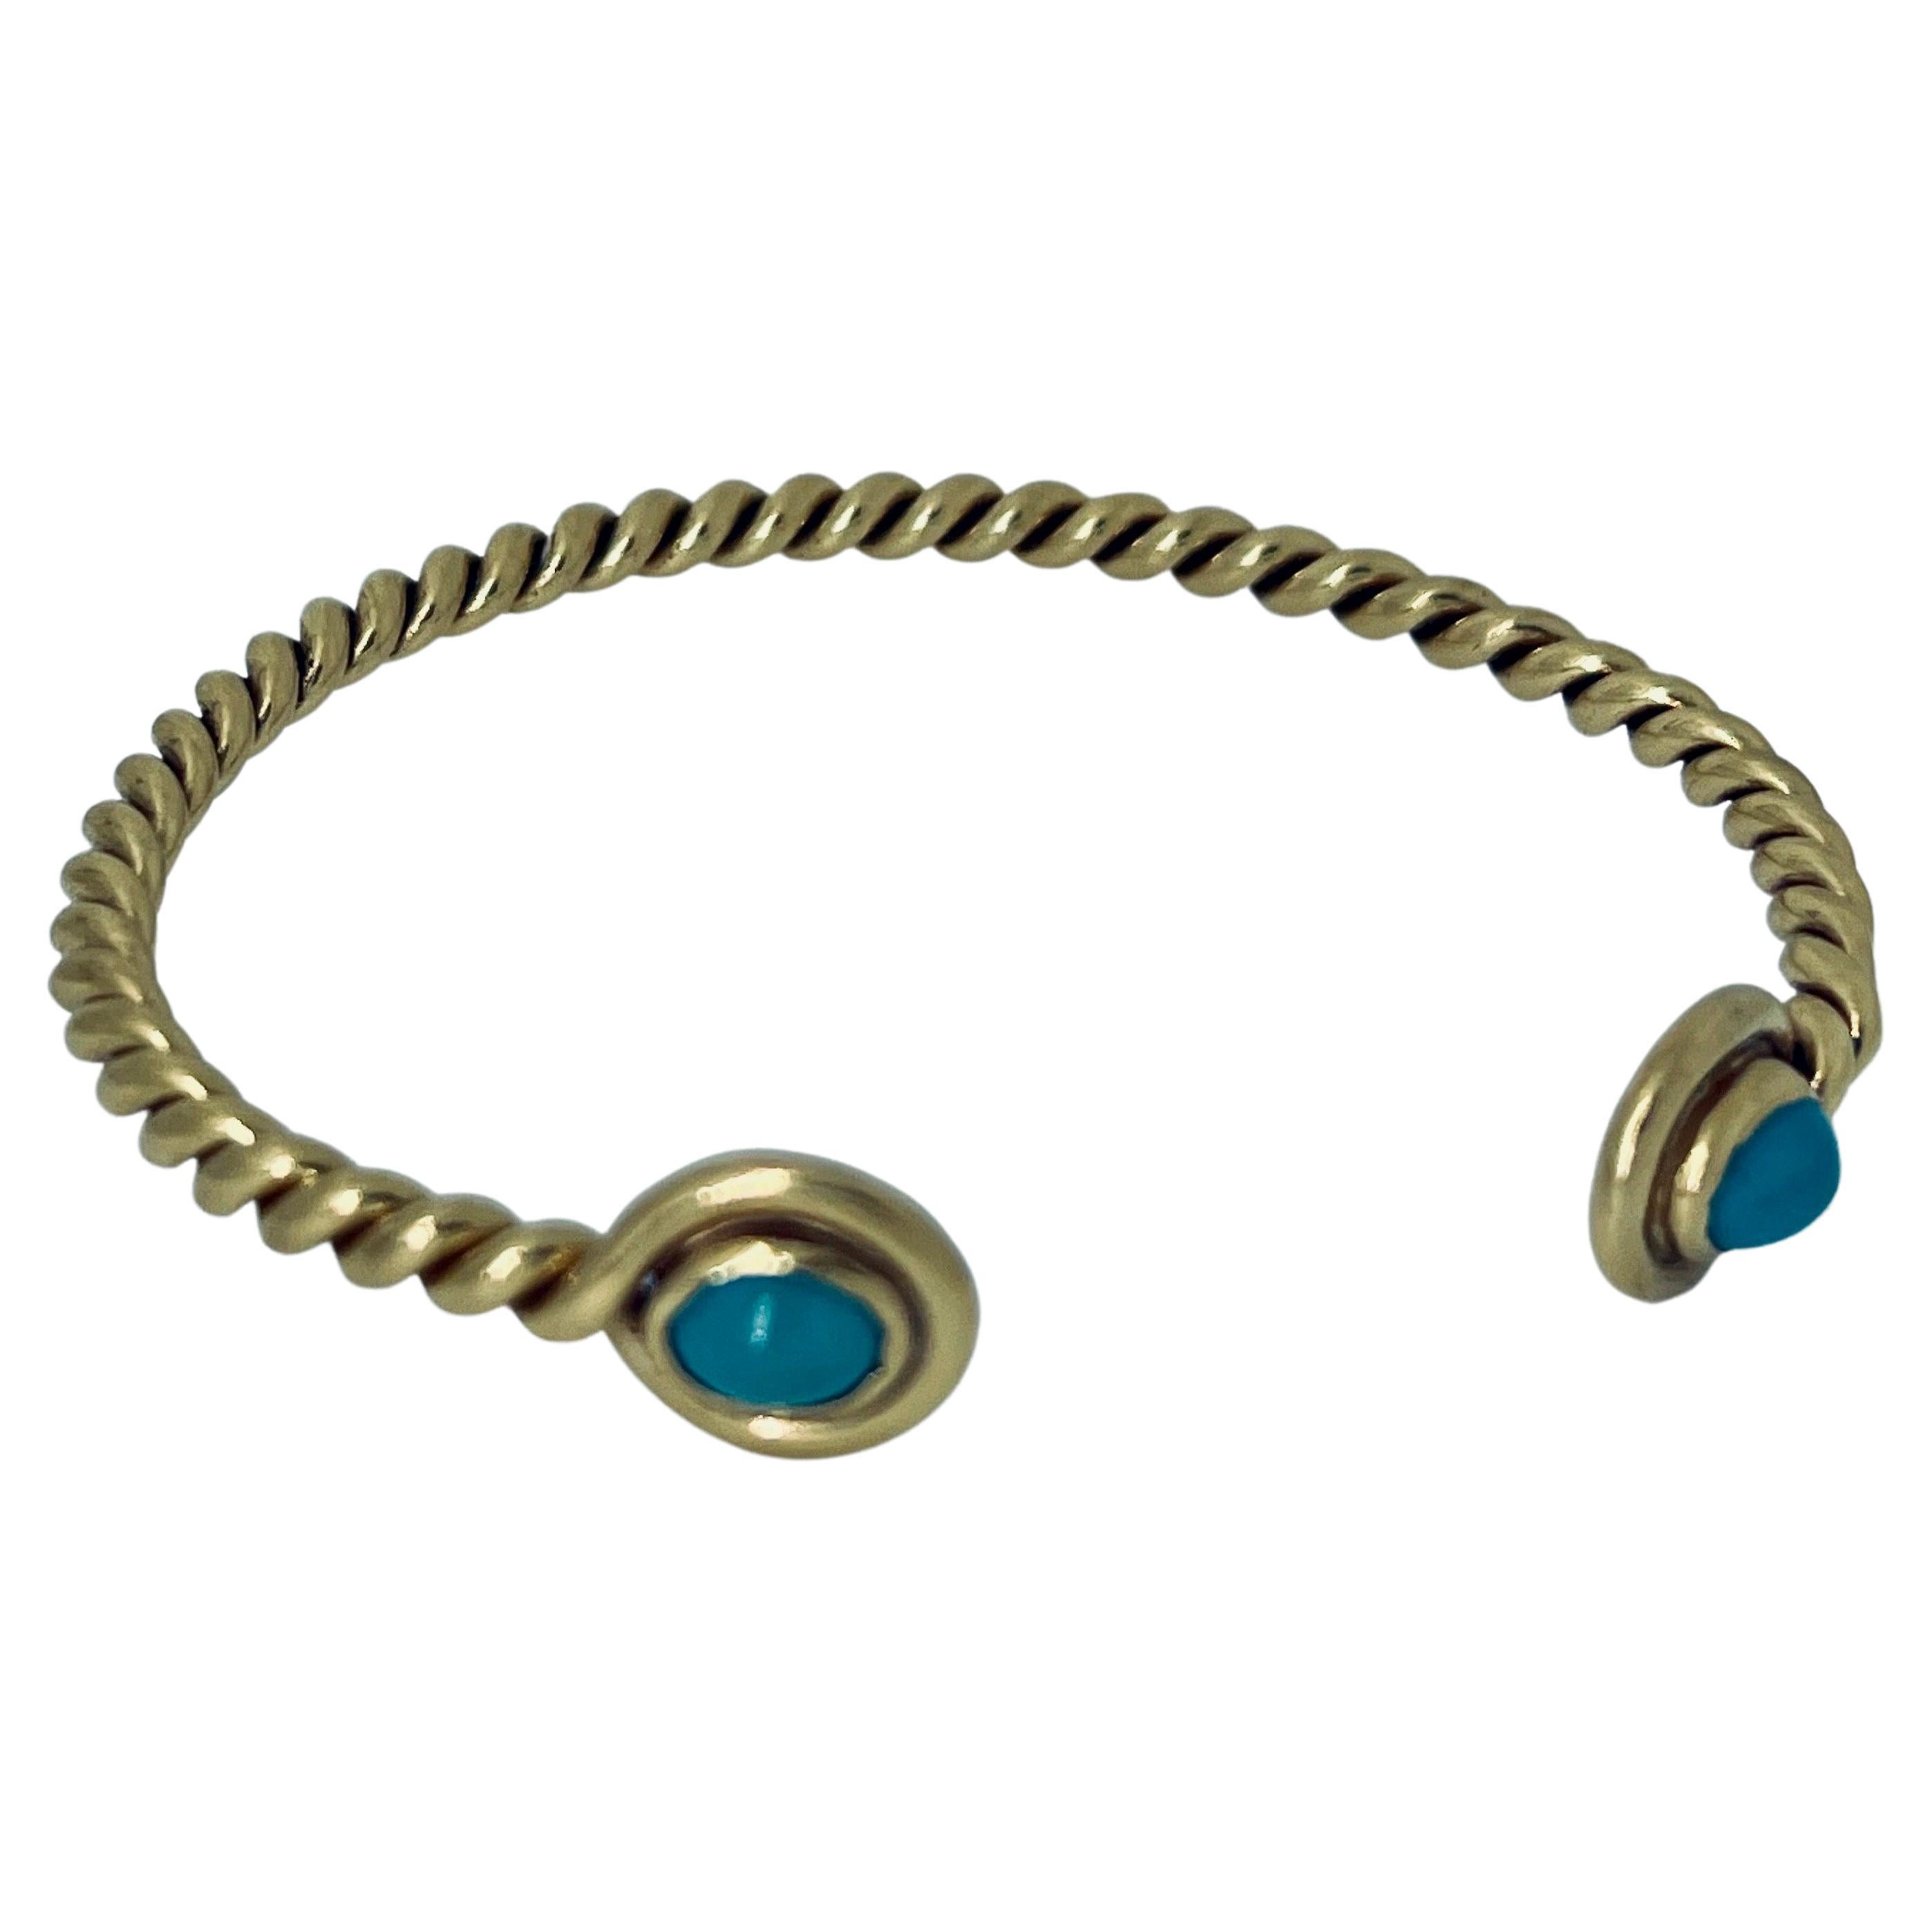 18 Carat Gold and Turquoise Bangle Bracelet, 16cm Circumference, circa 1970s